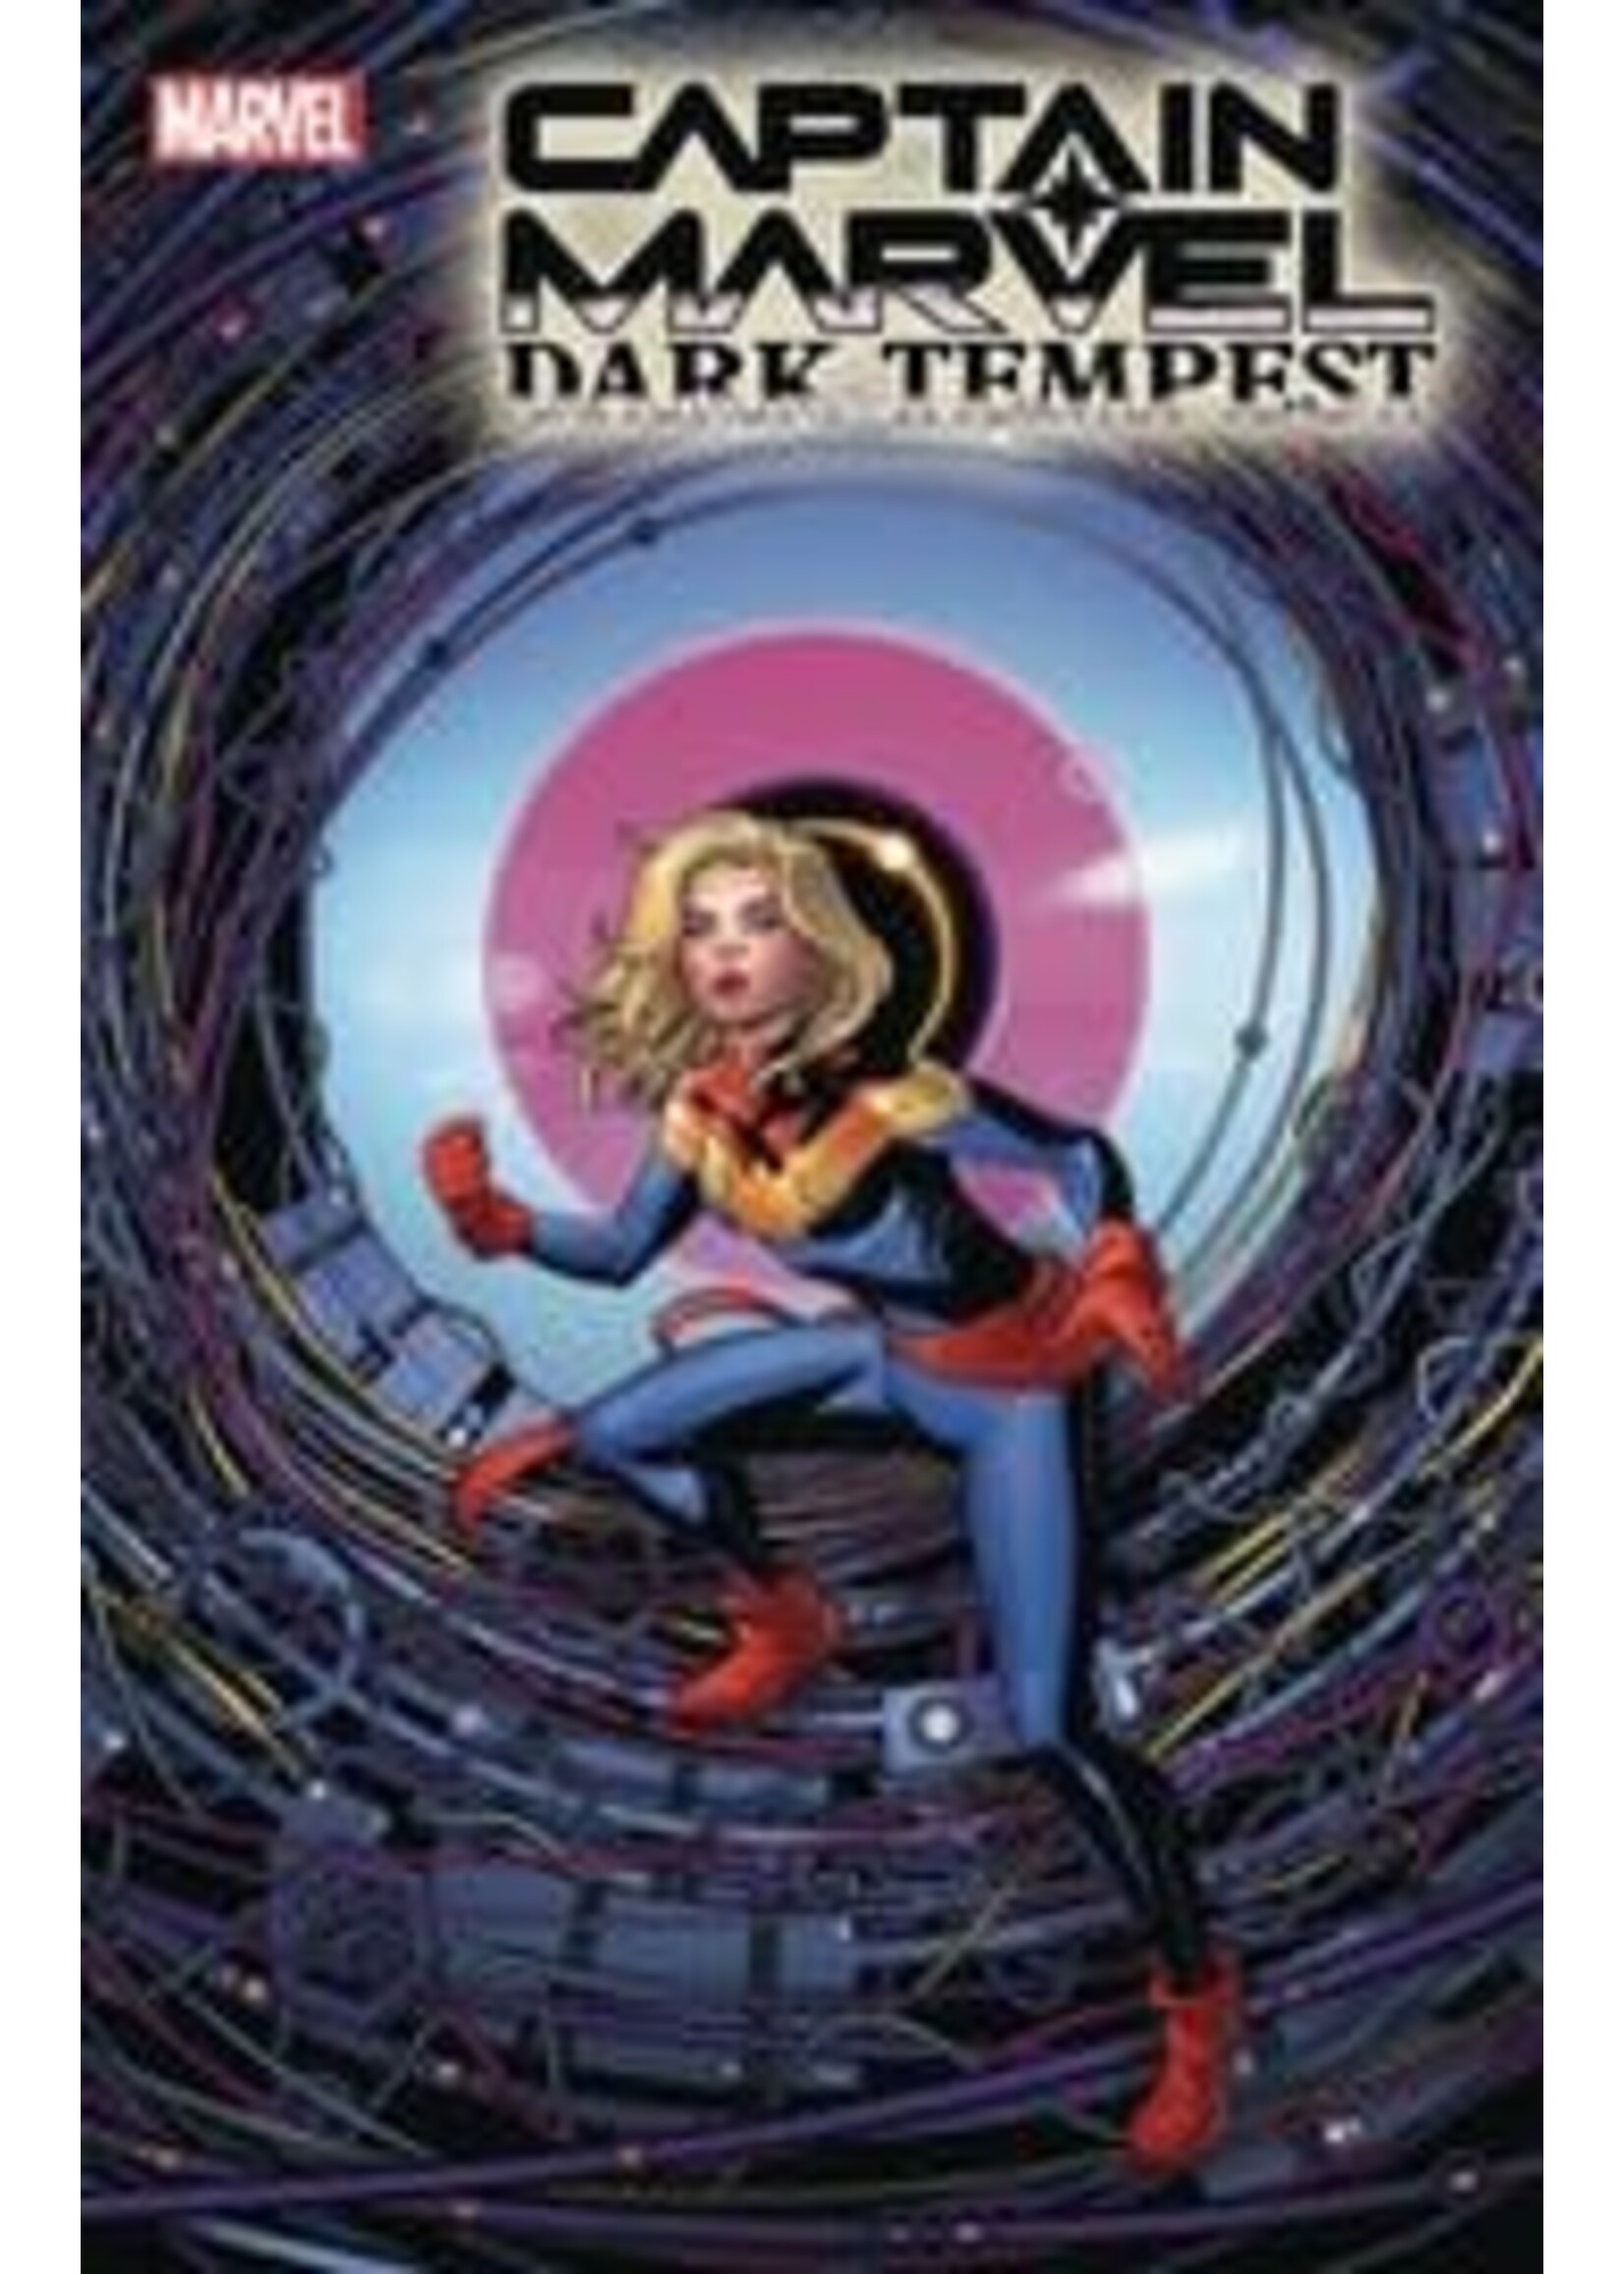 CAPTAIN MARVEL DARK TEMPEST complete 5 issue series